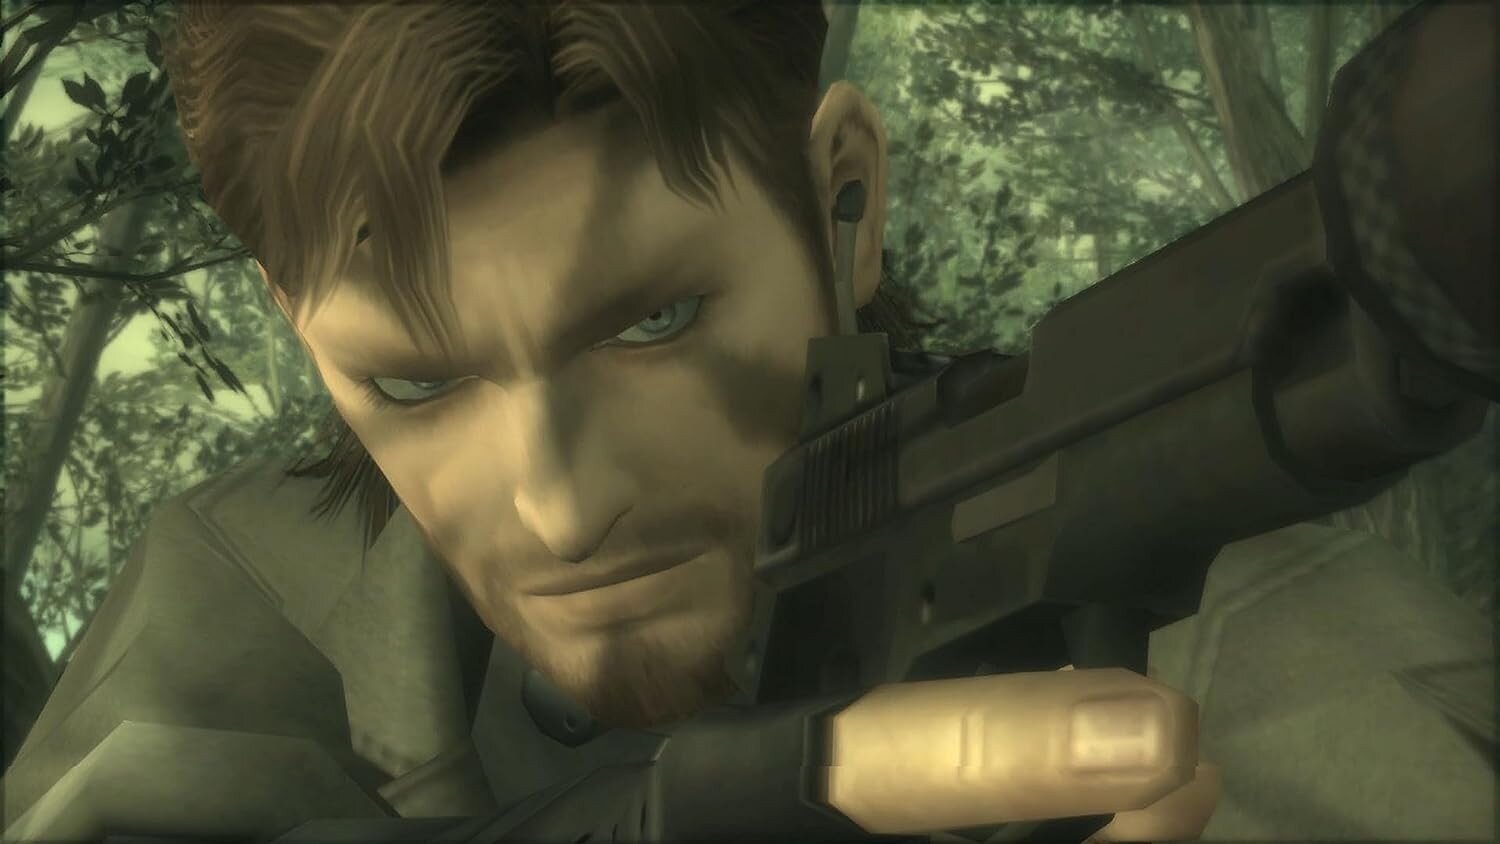 Metal Gear Solid - Master Collection Vol. 1 Switch цена и информация | Kompiuteriniai žaidimai | pigu.lt